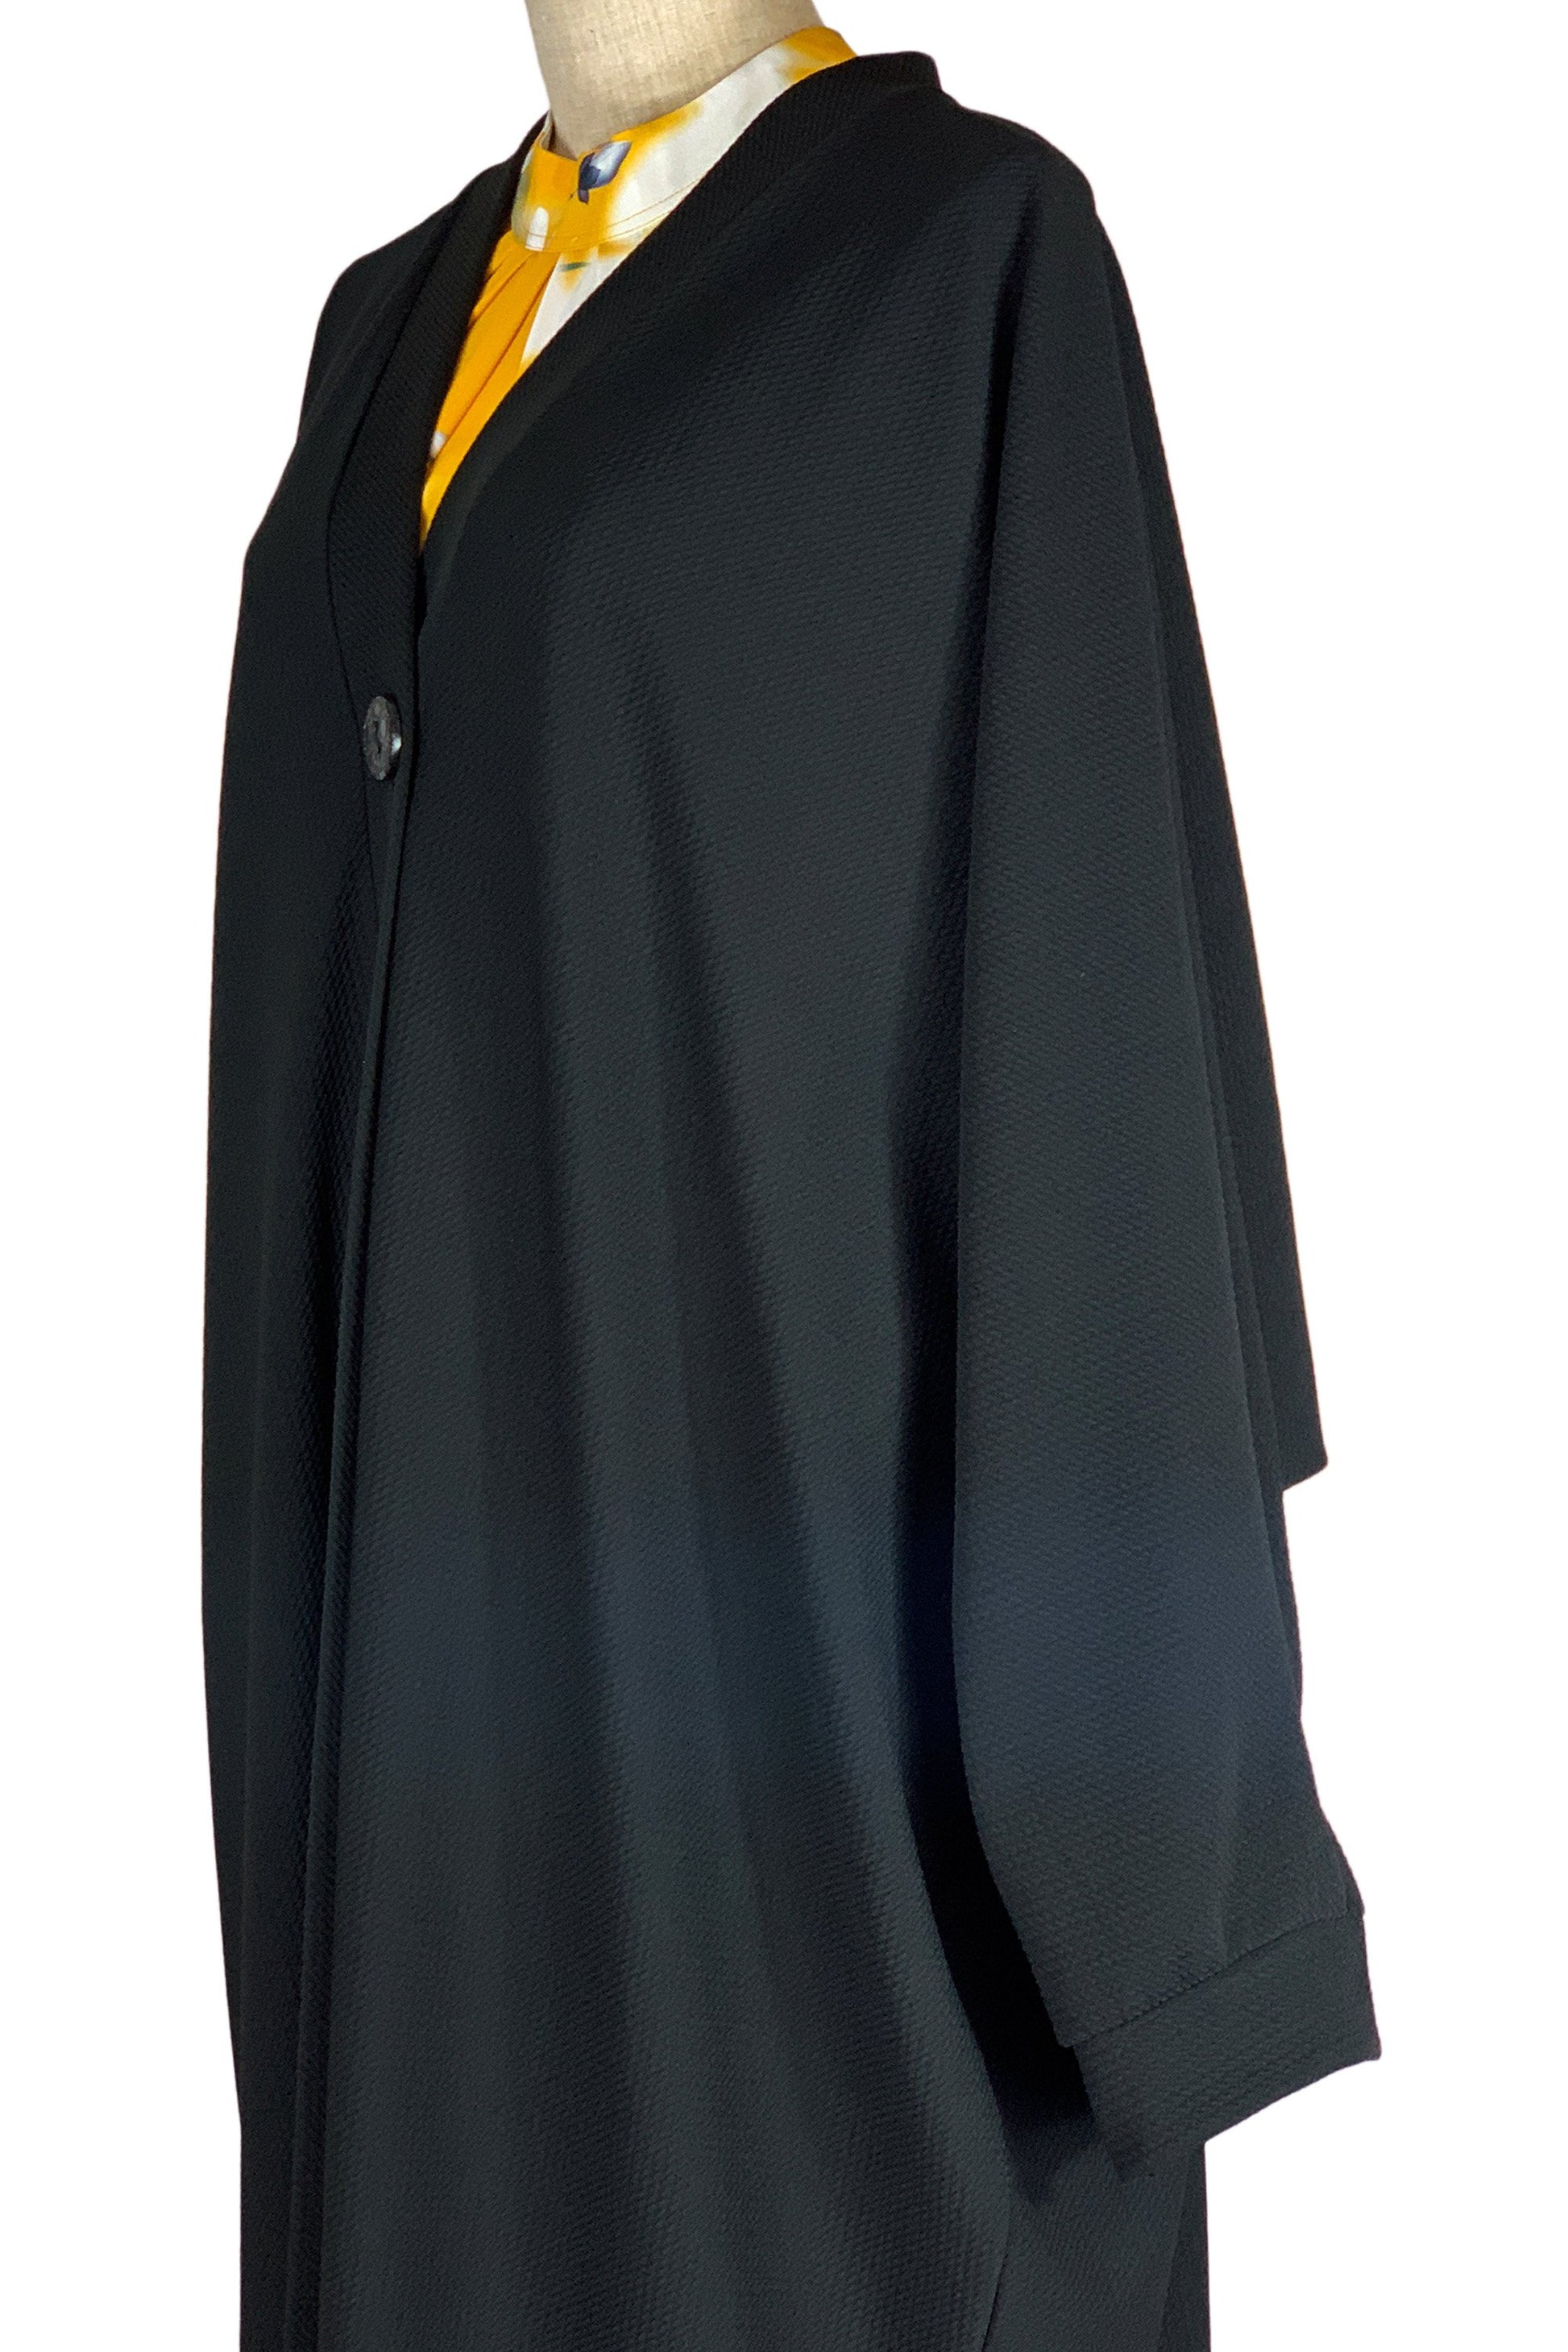 Women's loose free size casual coat- Black-almanaar Islamic Store